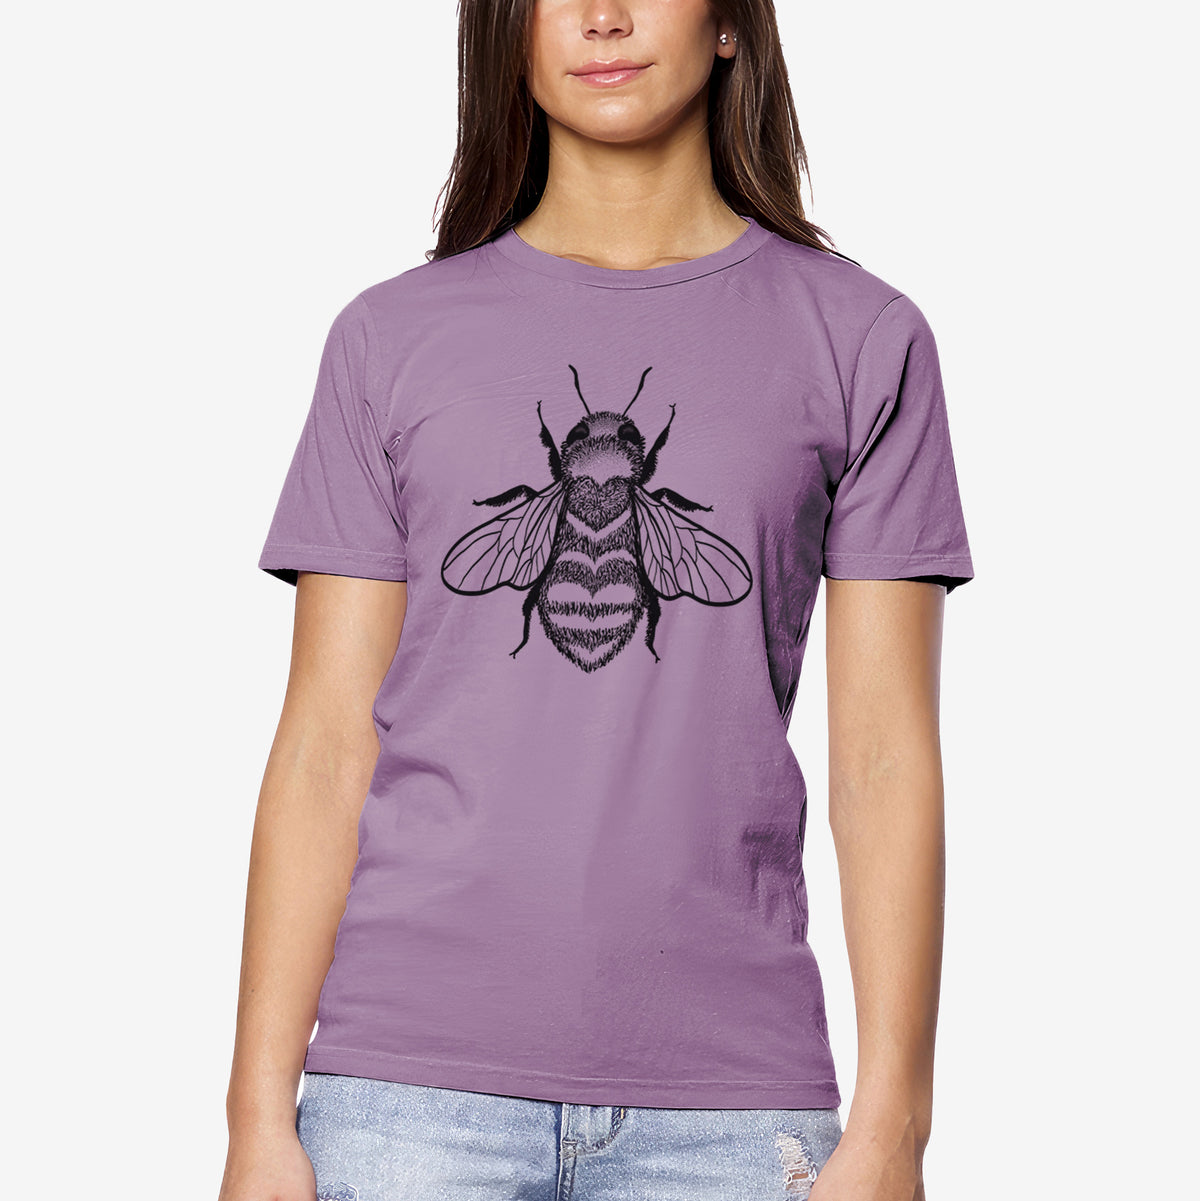 Bee Love - Unisex Crewneck - Made in USA - 100% Organic Cotton